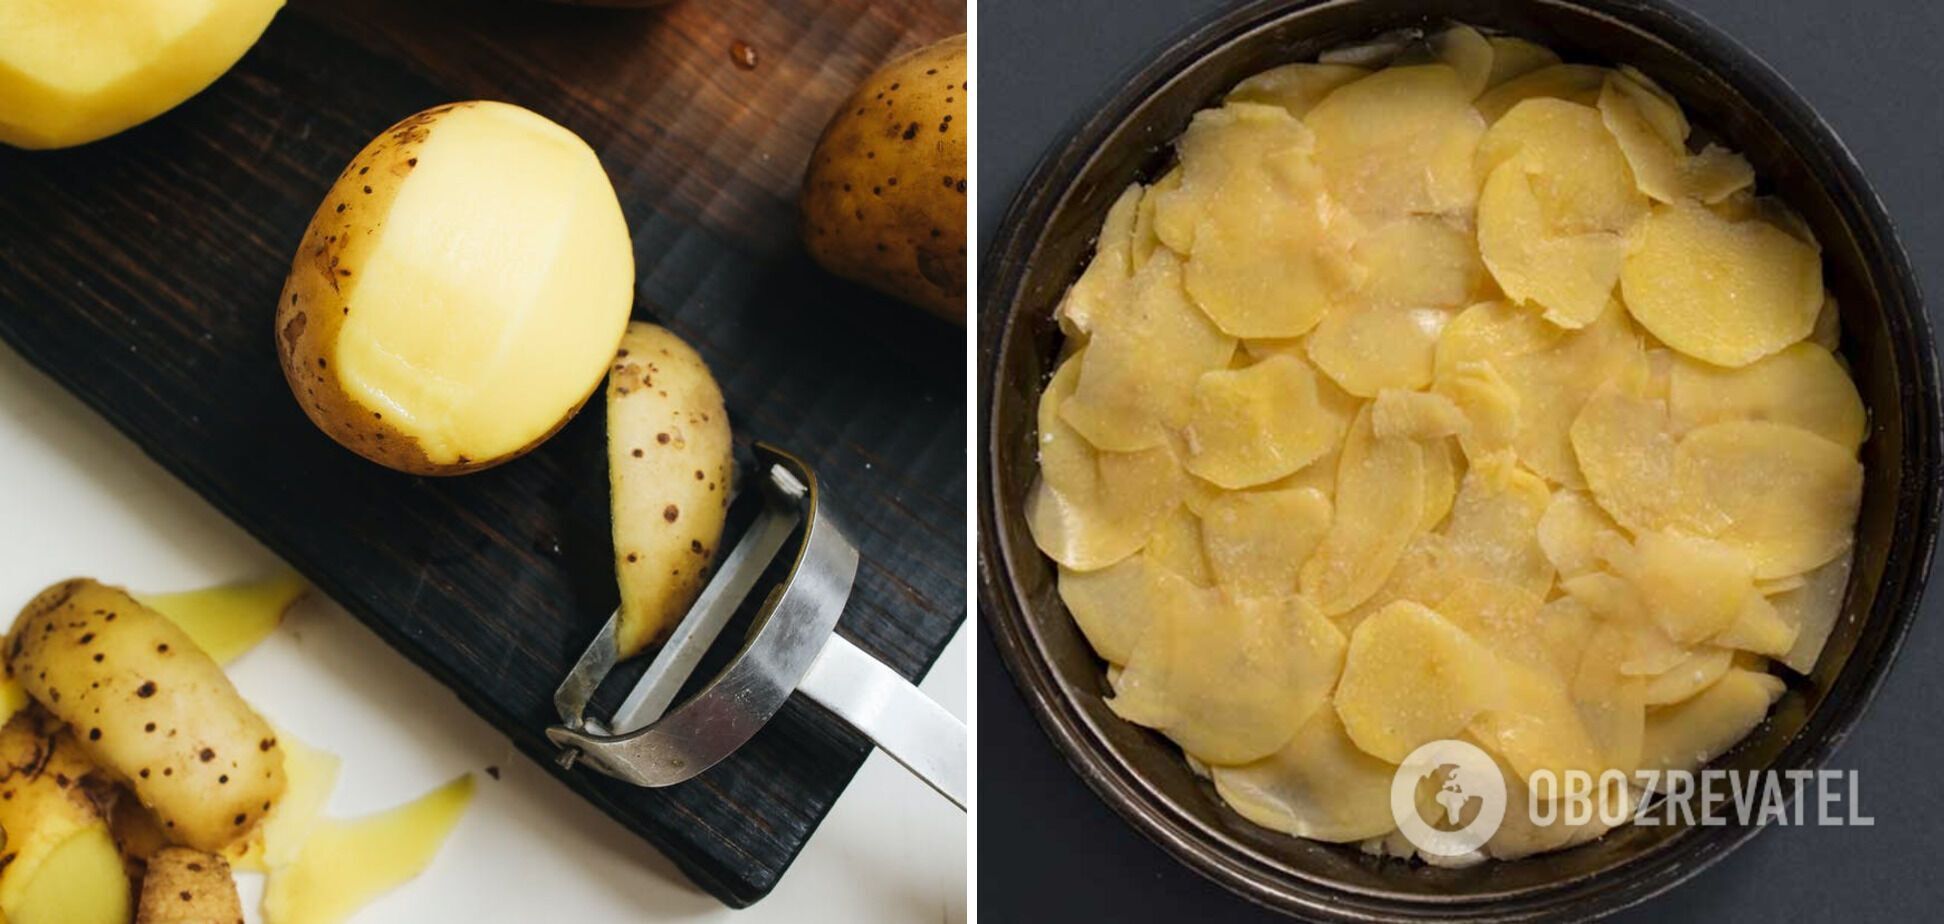 Sliced potatoes